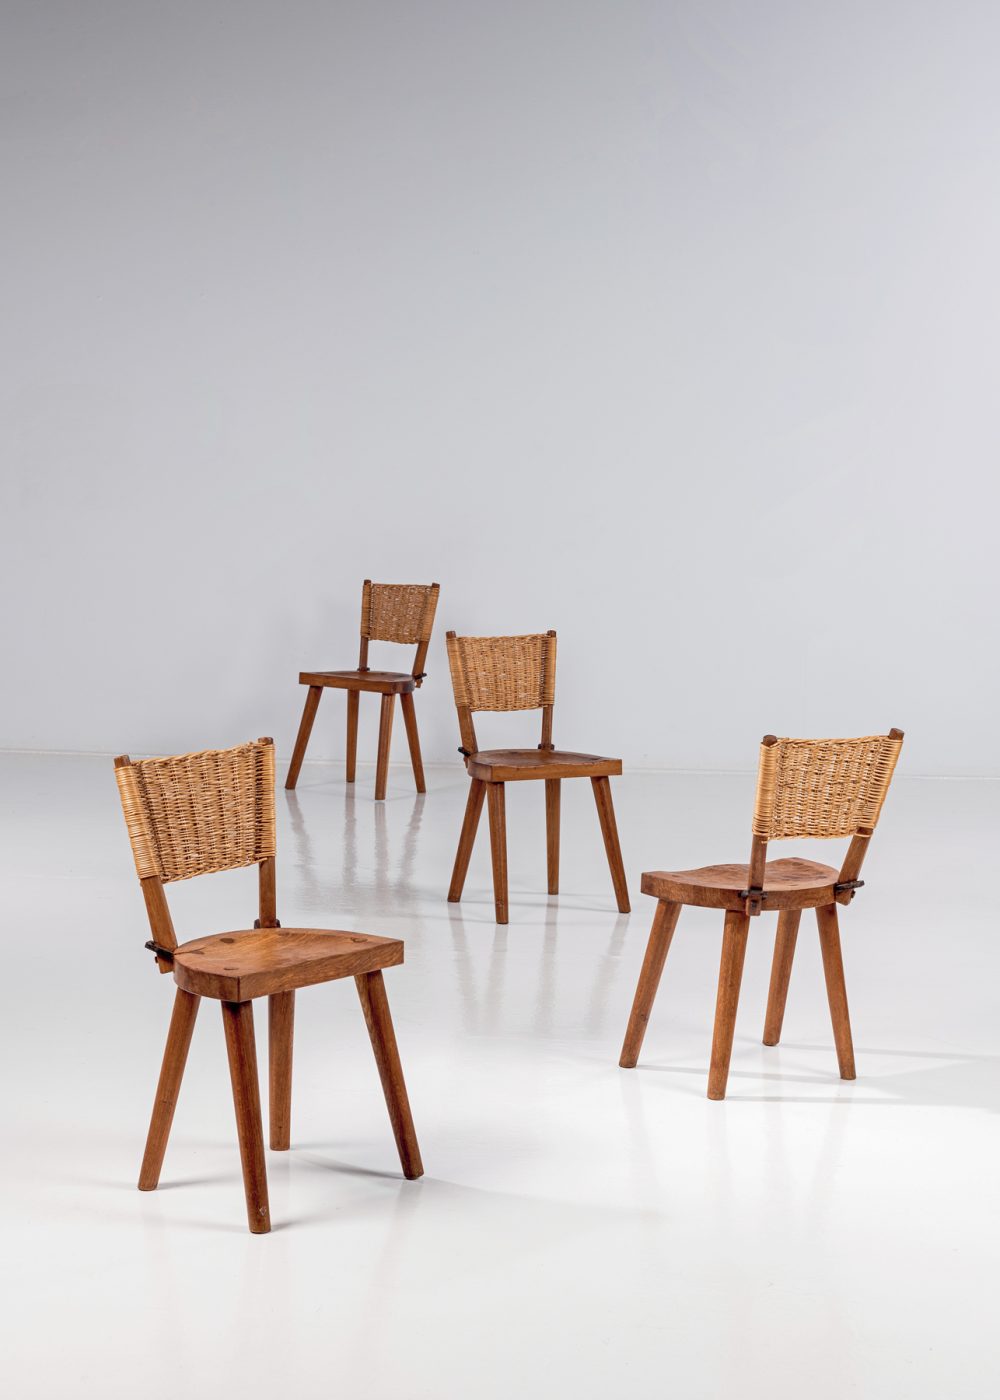 circa 1955 oak and wicker chairs by Les Artisans de Marolles